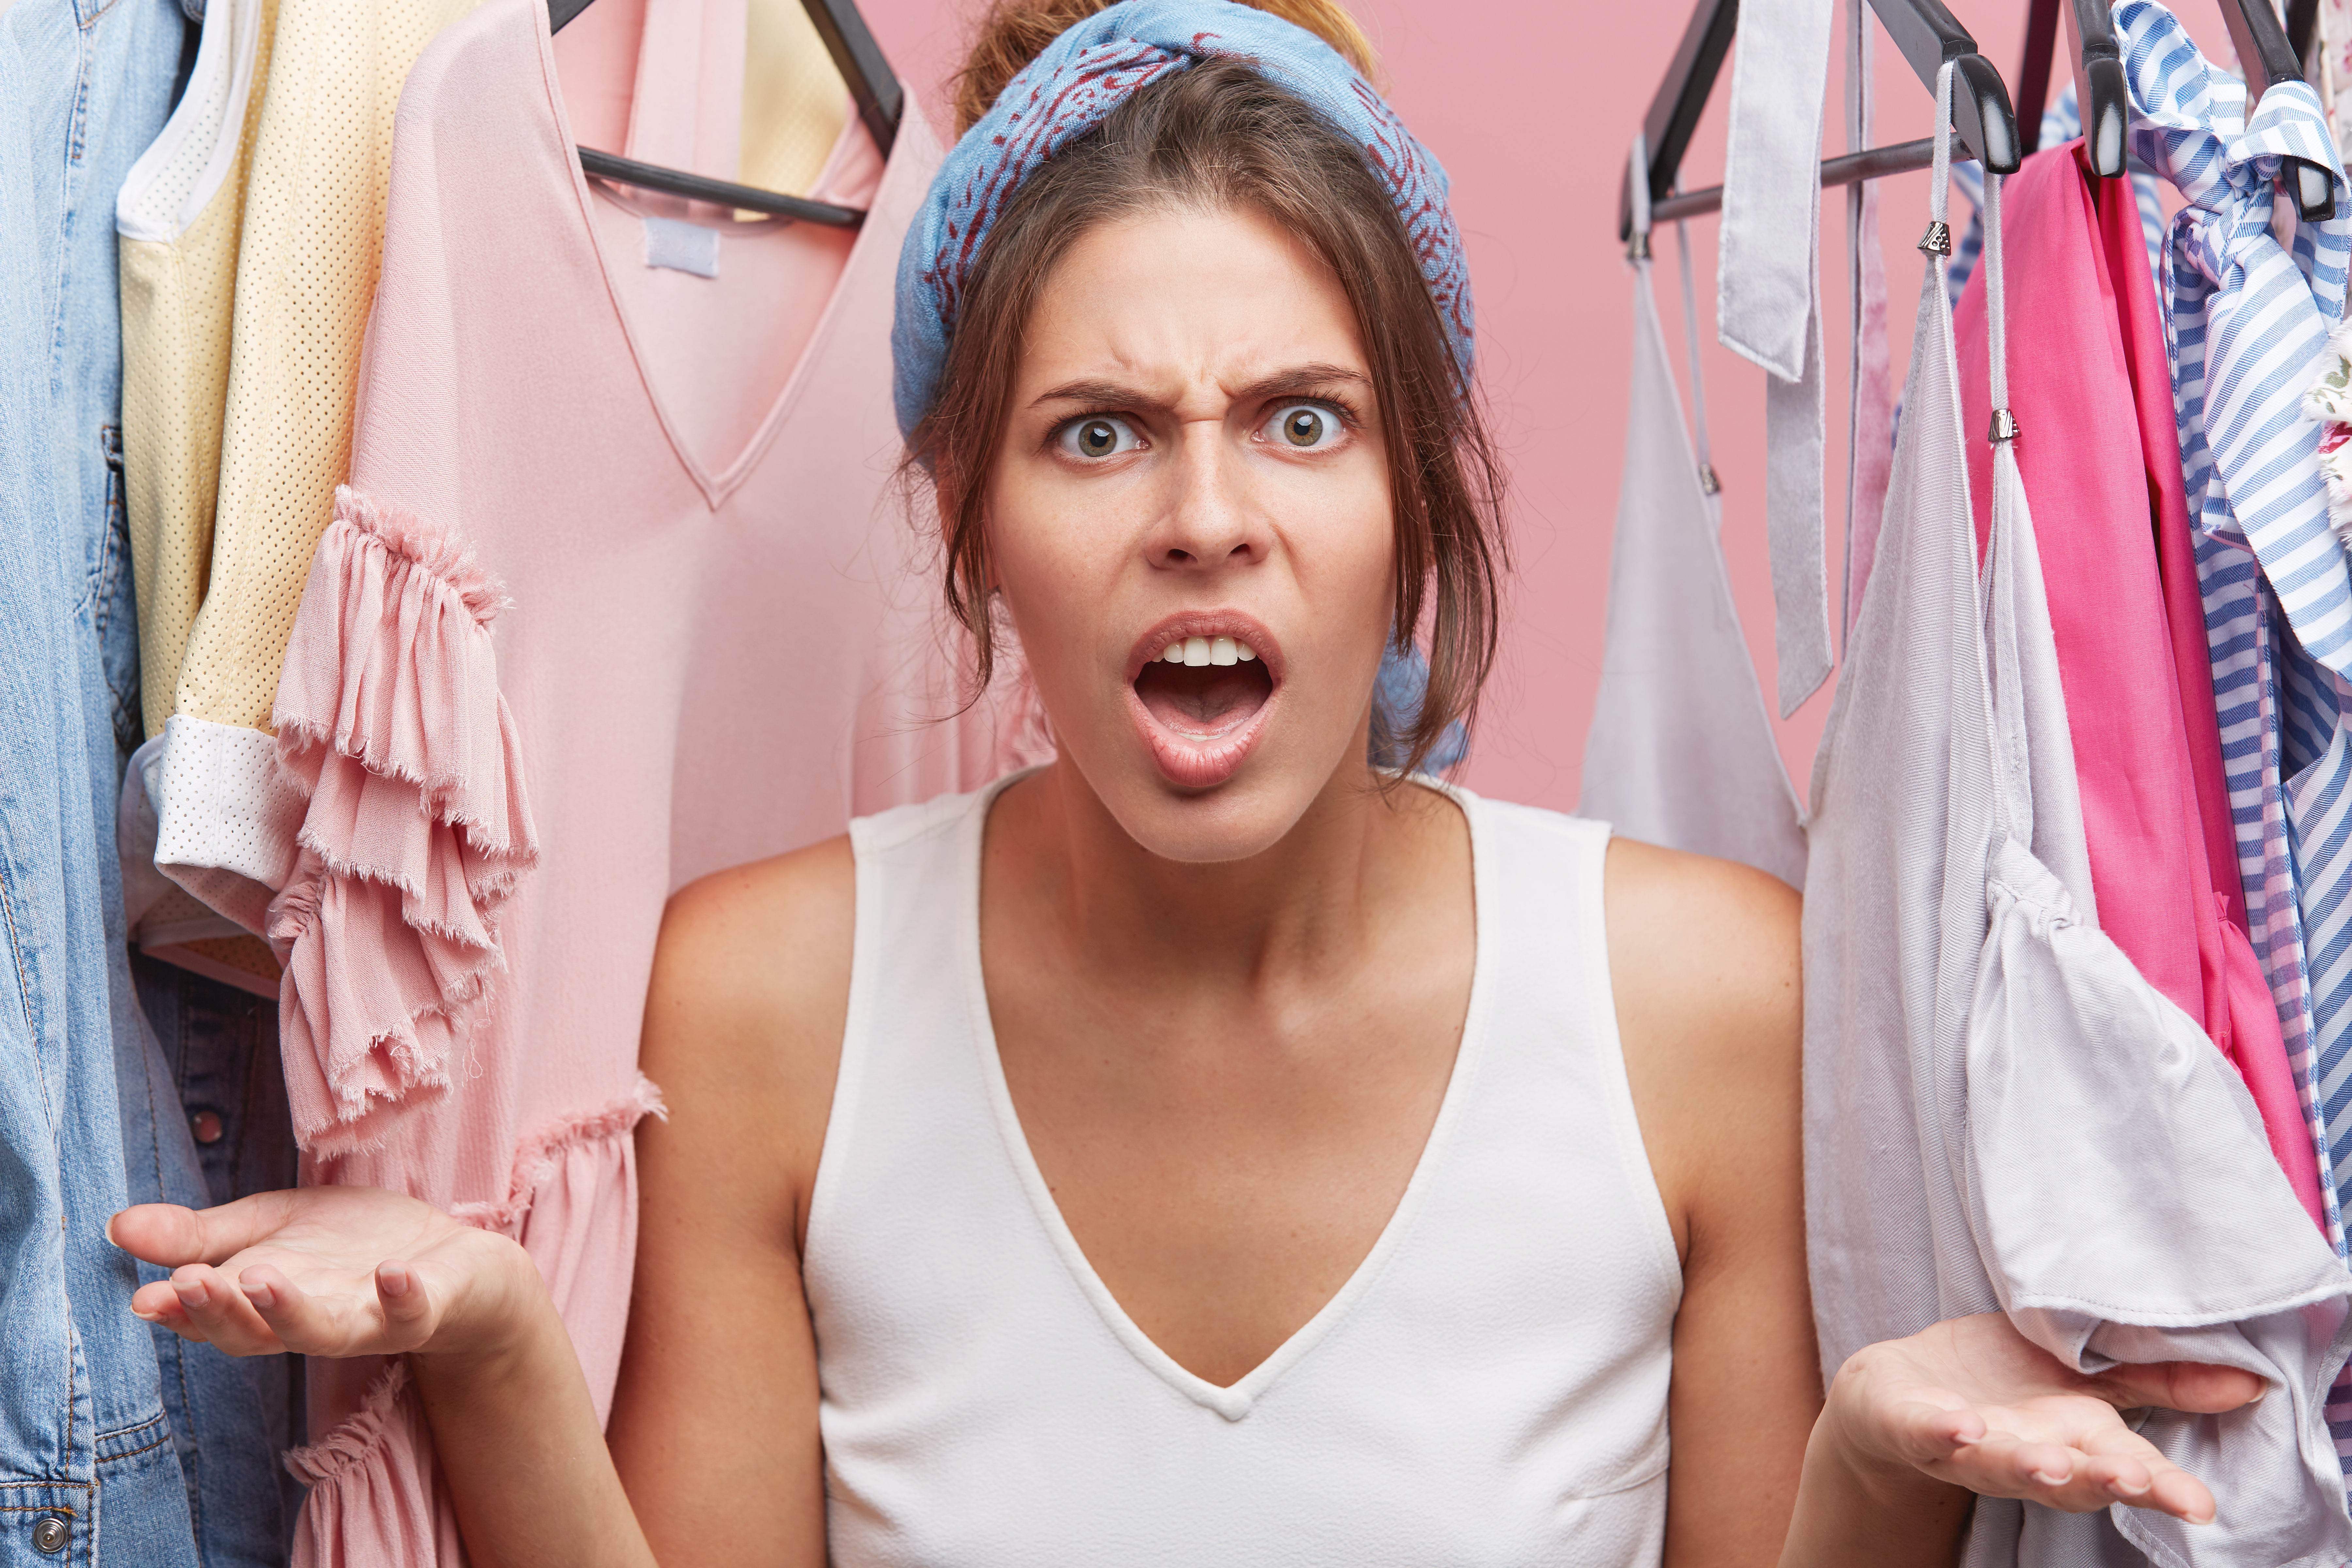 Woman furious inside her closet | Source: wayhomestudio on Freepik